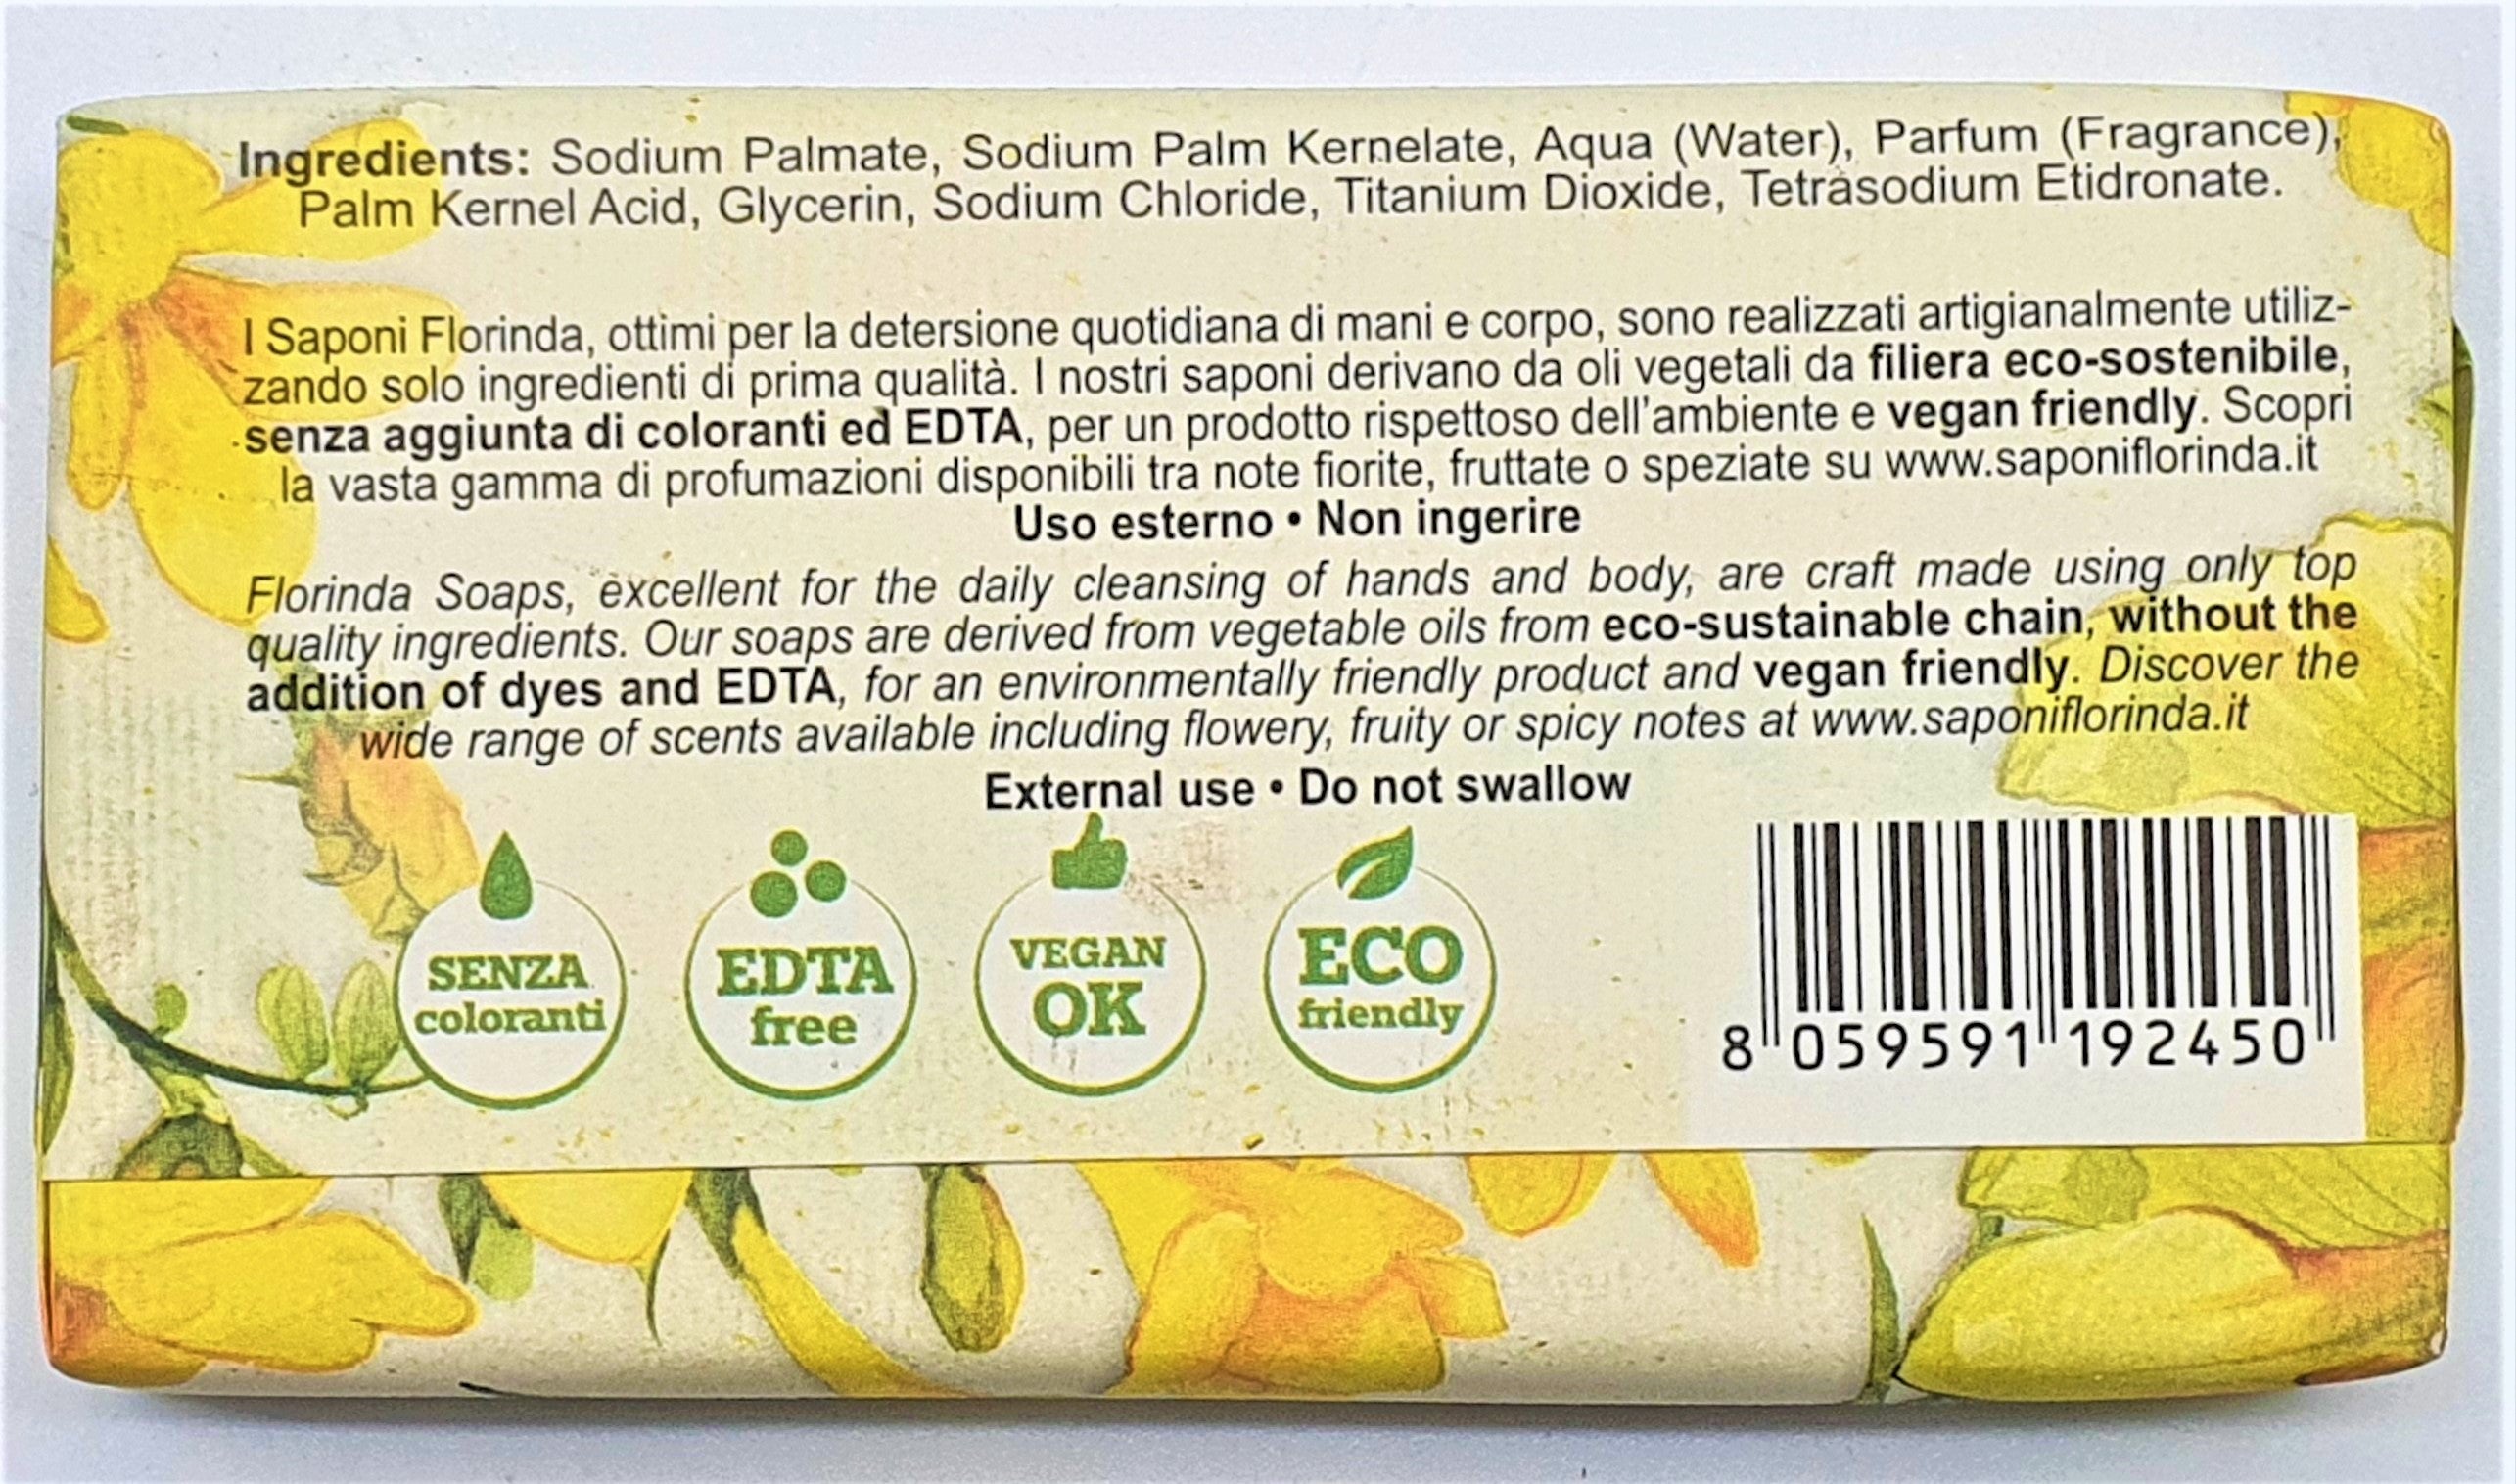 Freesia Vegetable Soap